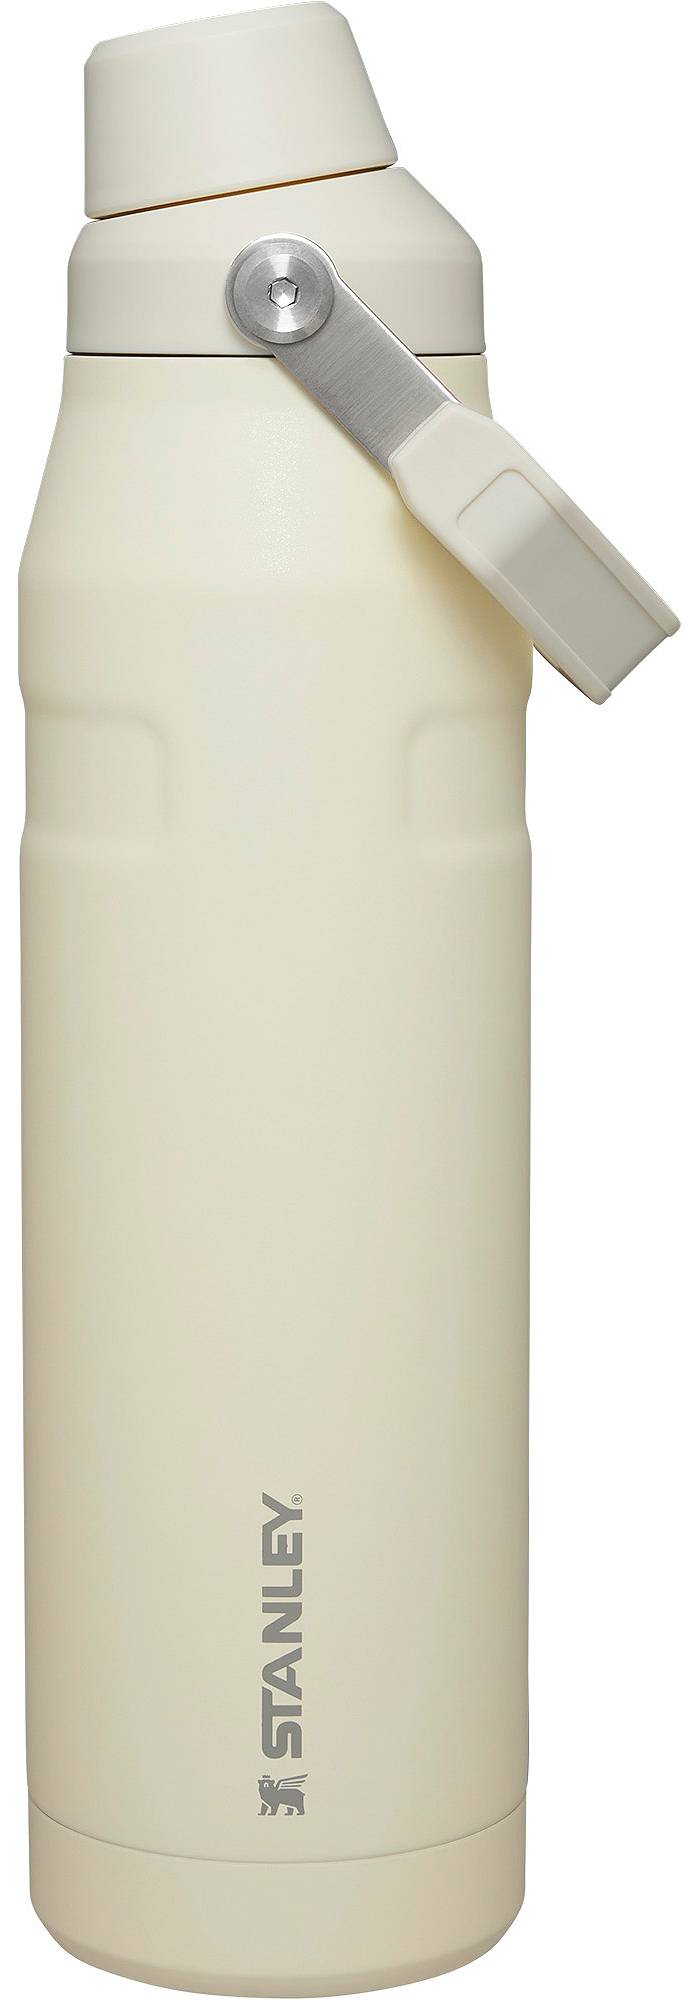 Promo Stanley Aerolight Tumbler Bottle 16 oz